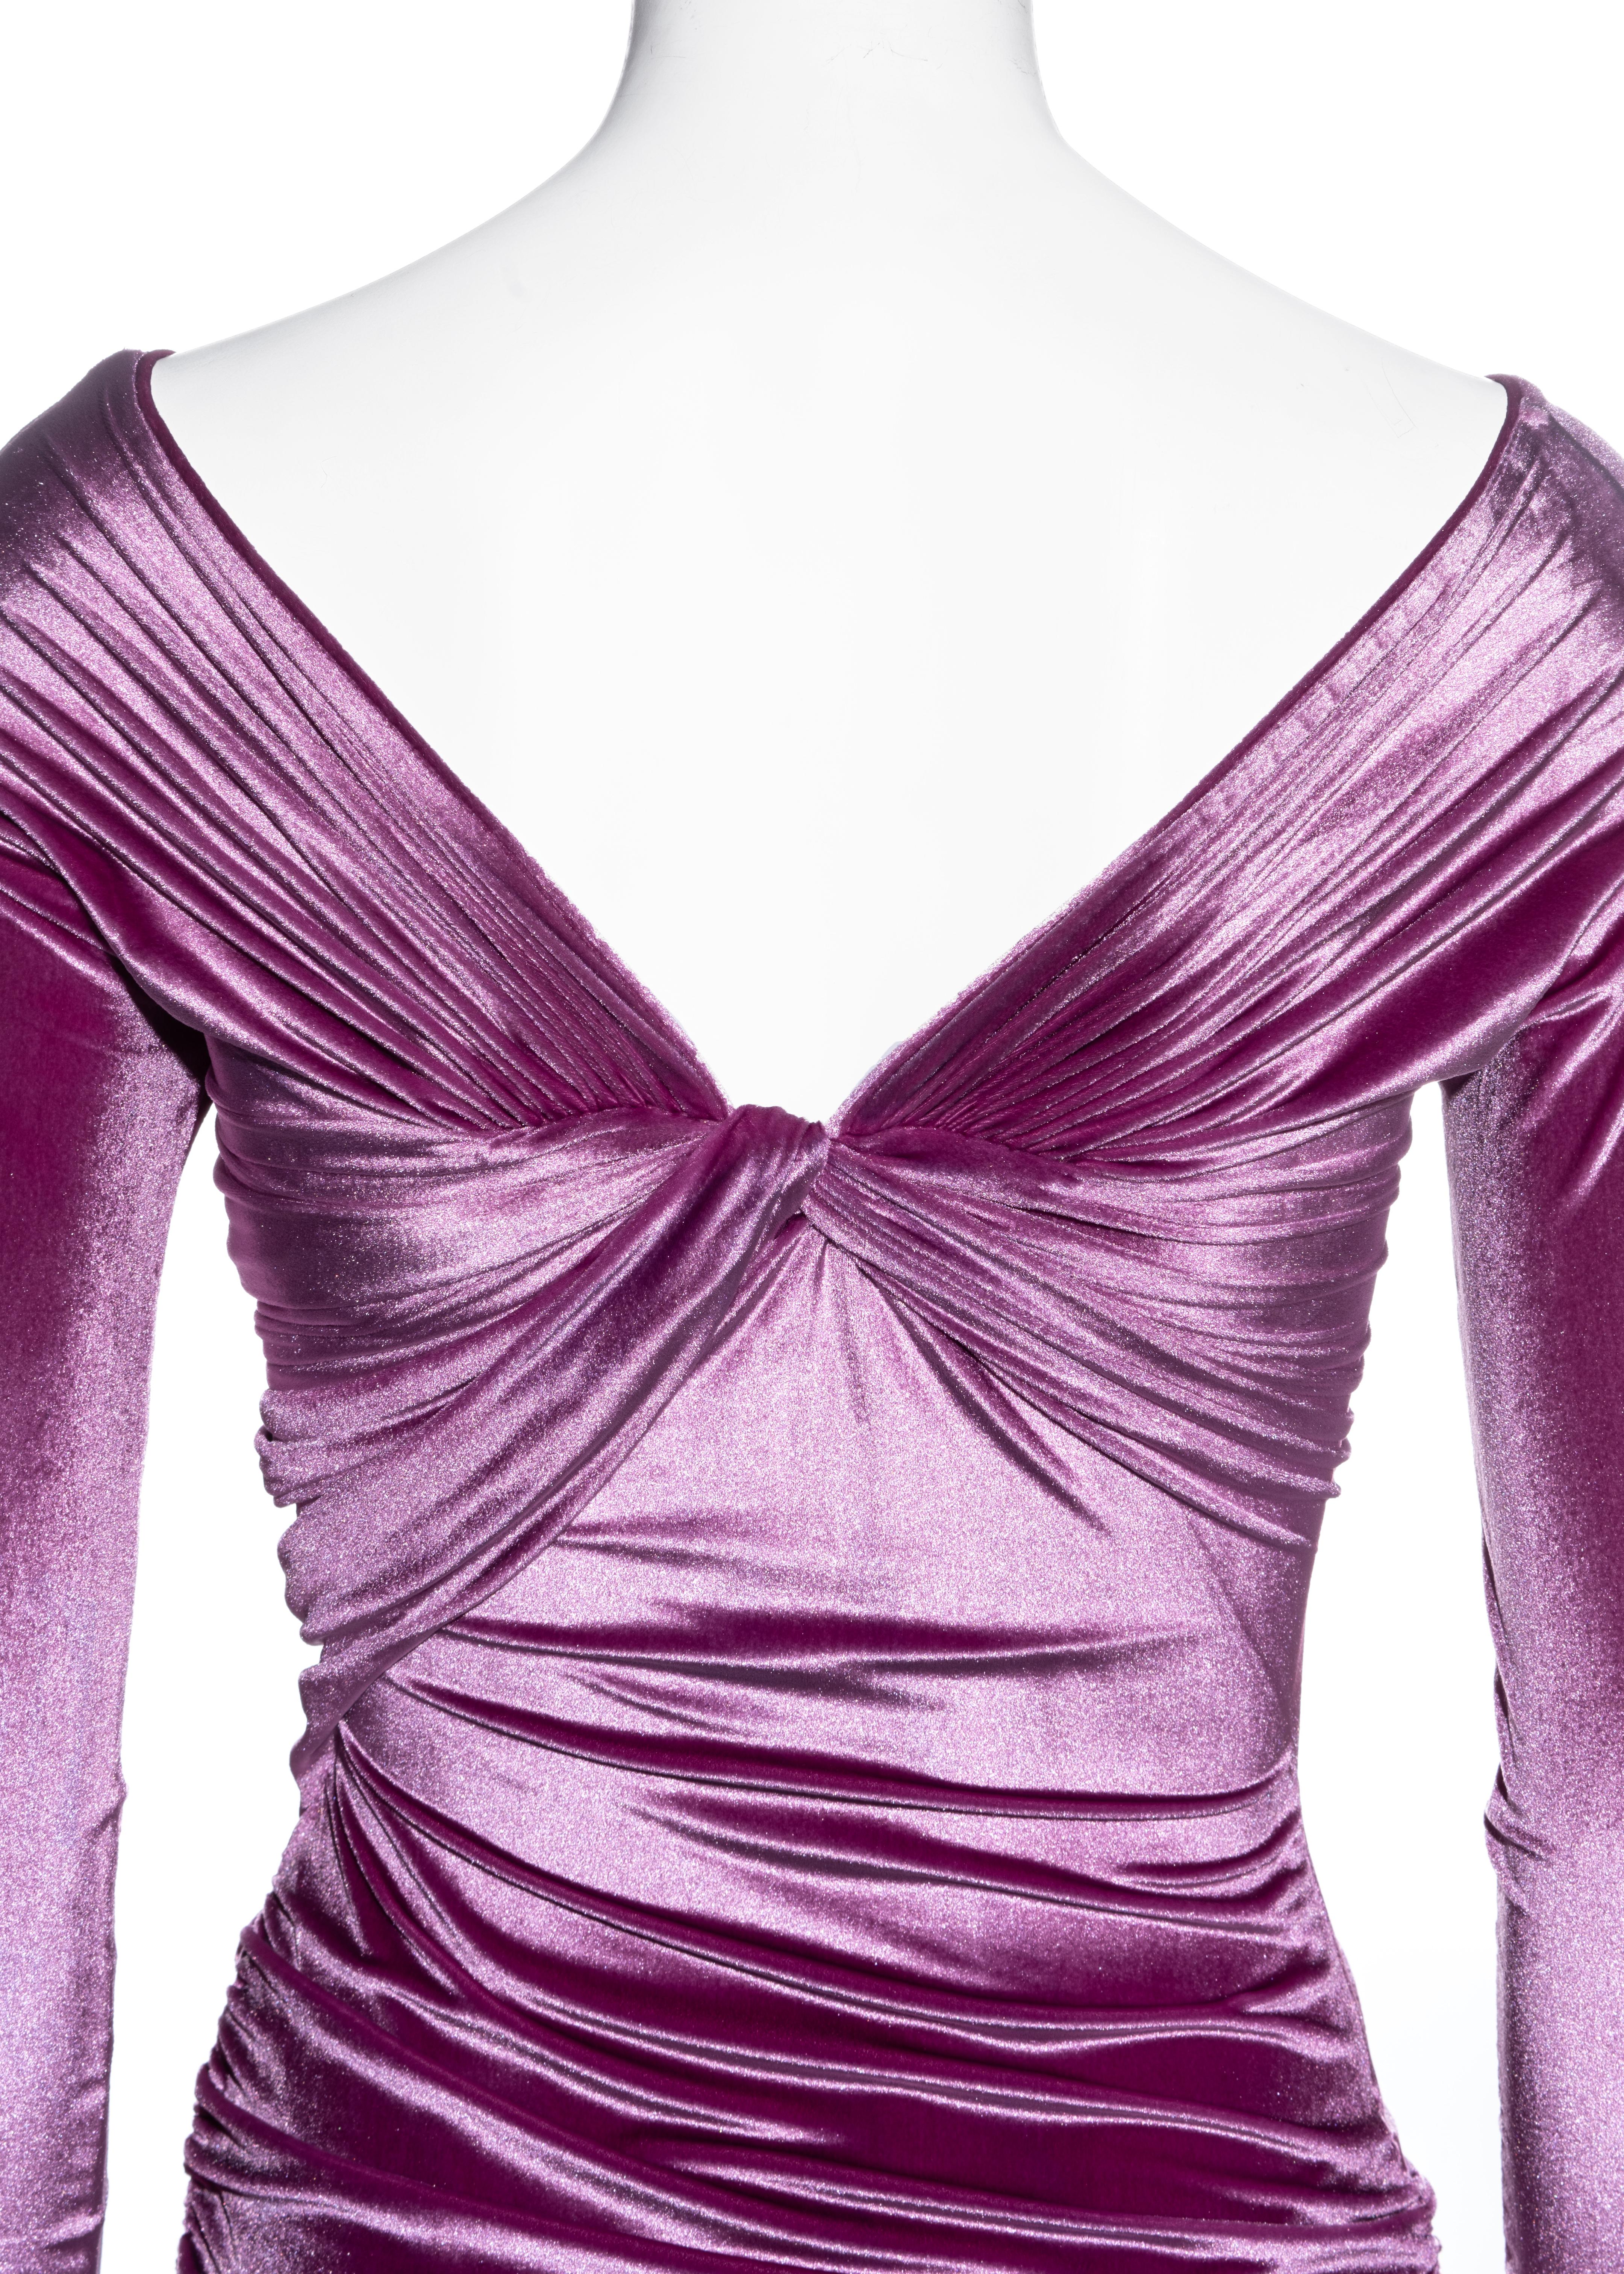 Gianni Versace magenta pink velvet ruched evening dress, fw 1995 2